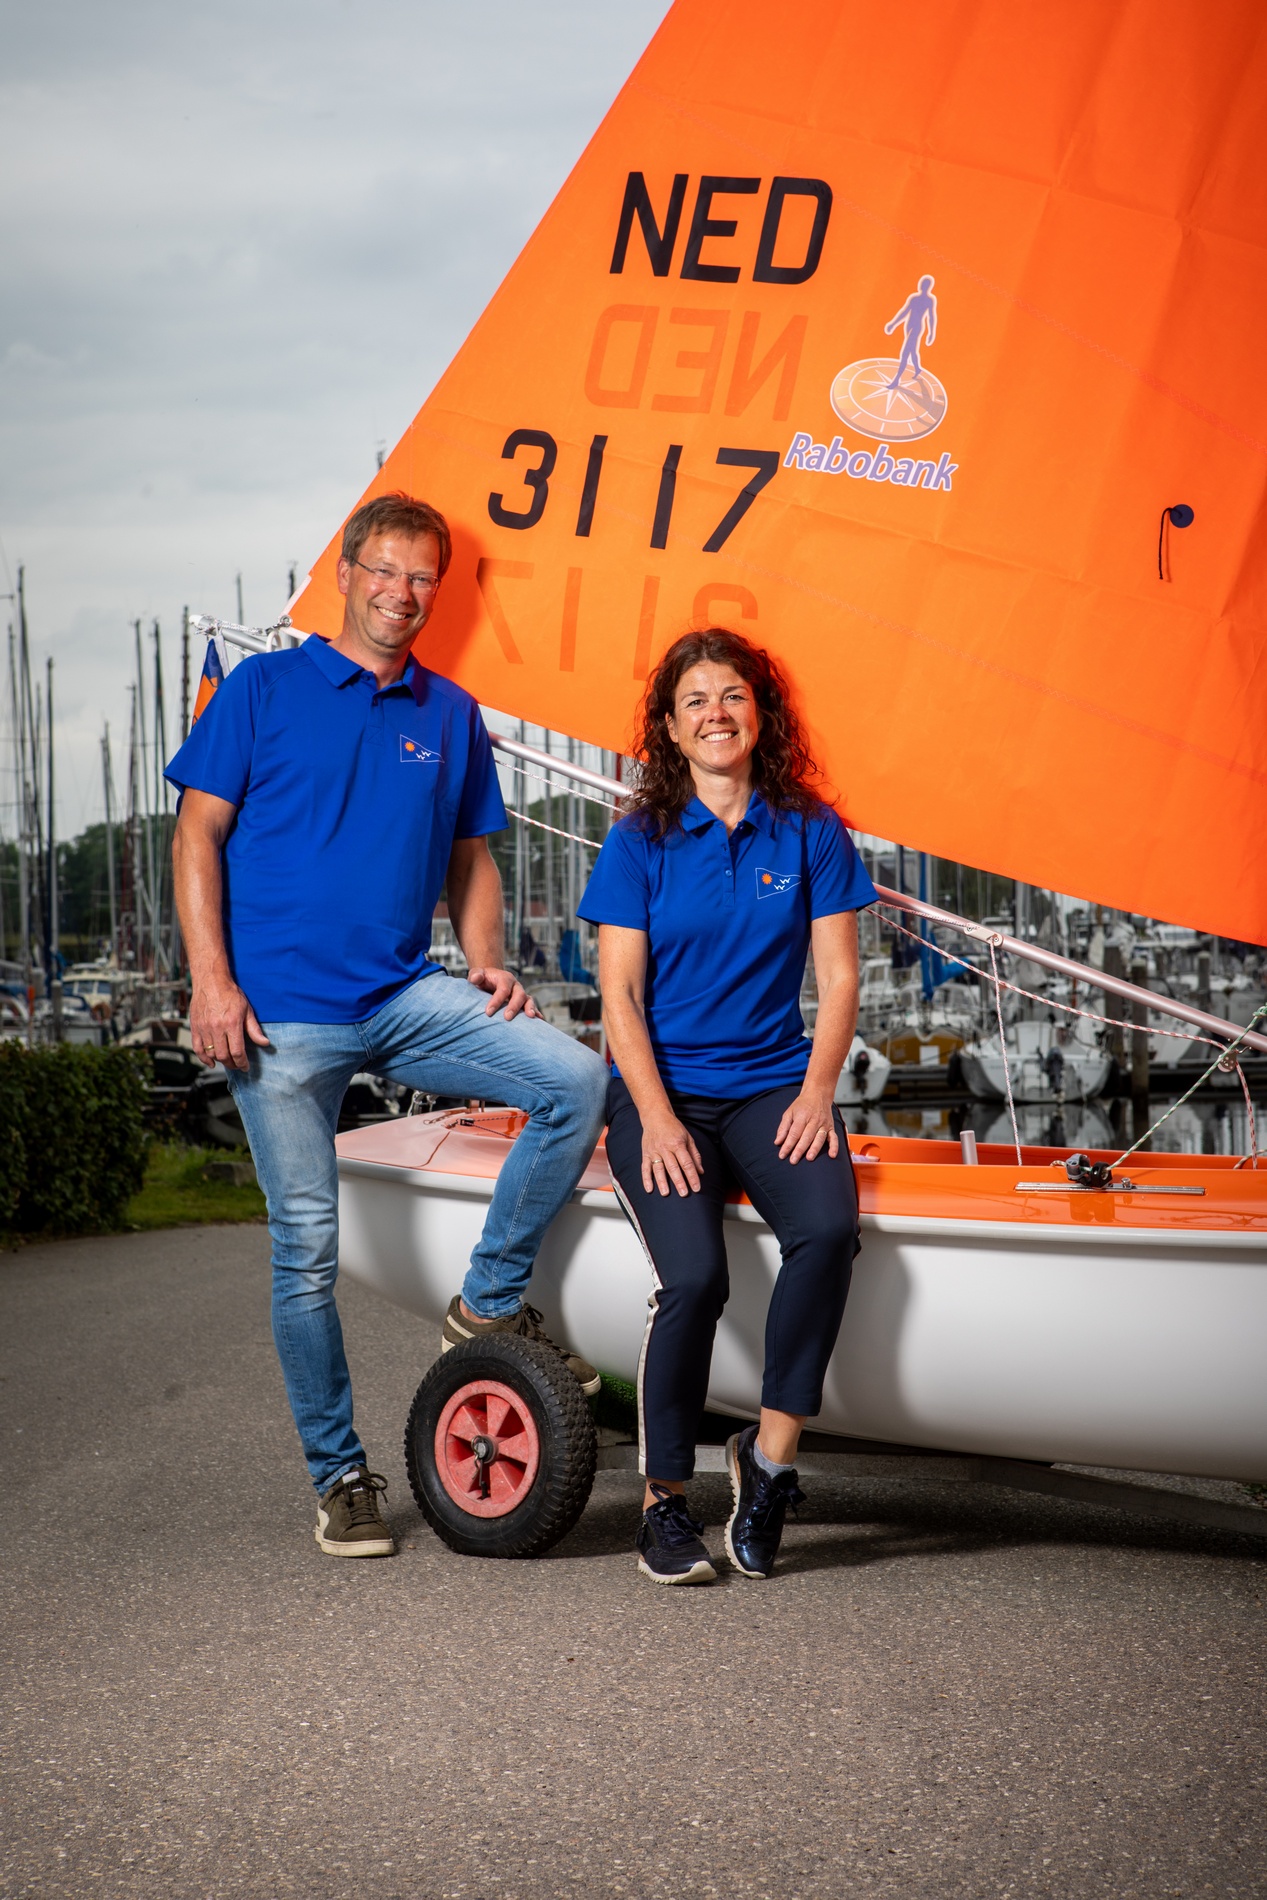 Sailability Bij Watersport Vereniging Willemstad